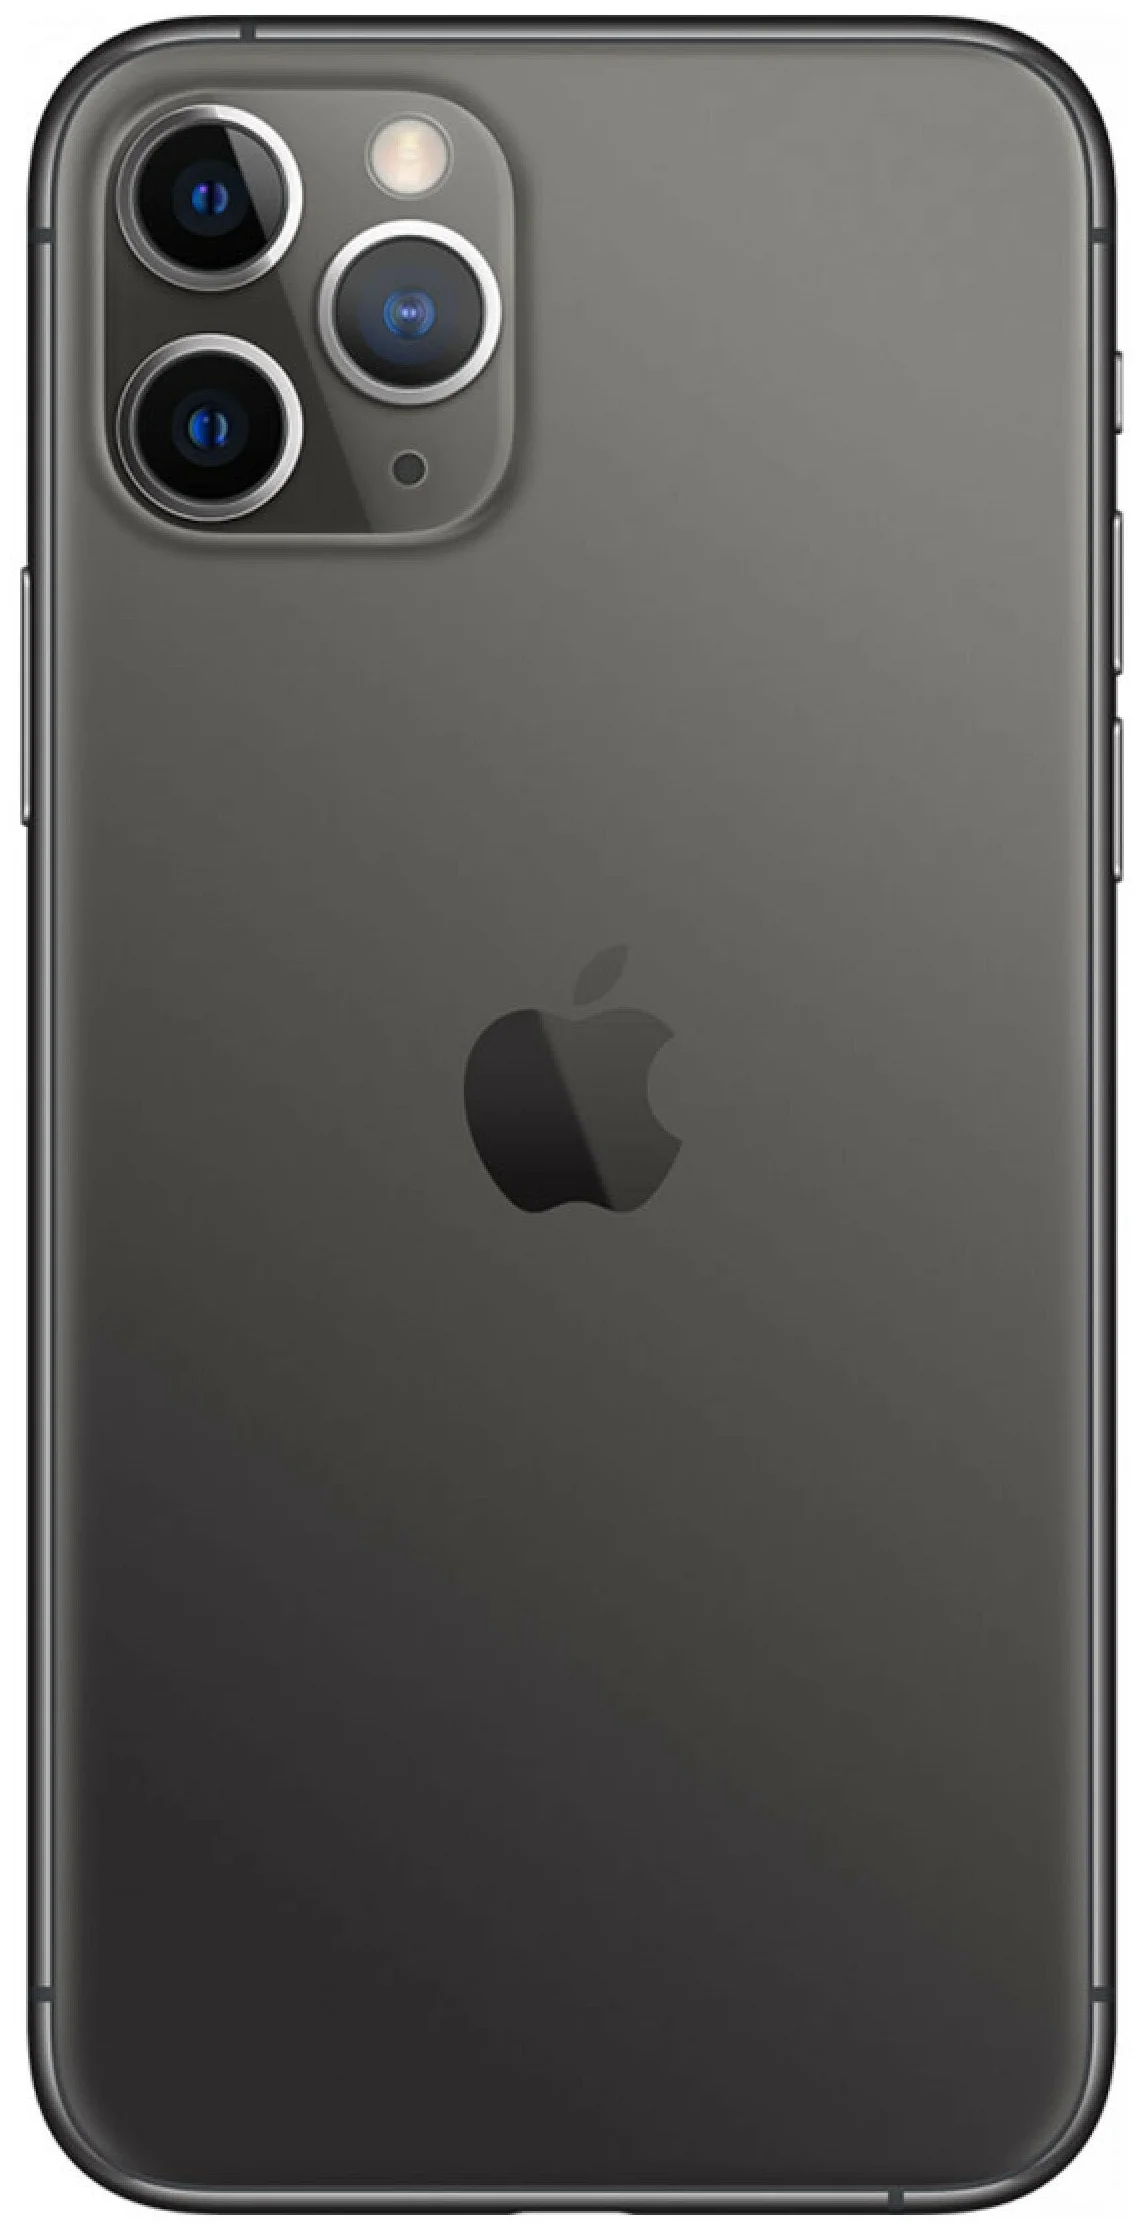 Apple iPhone 11 Pro Max 64GB - процессор: Apple A13 Bionic